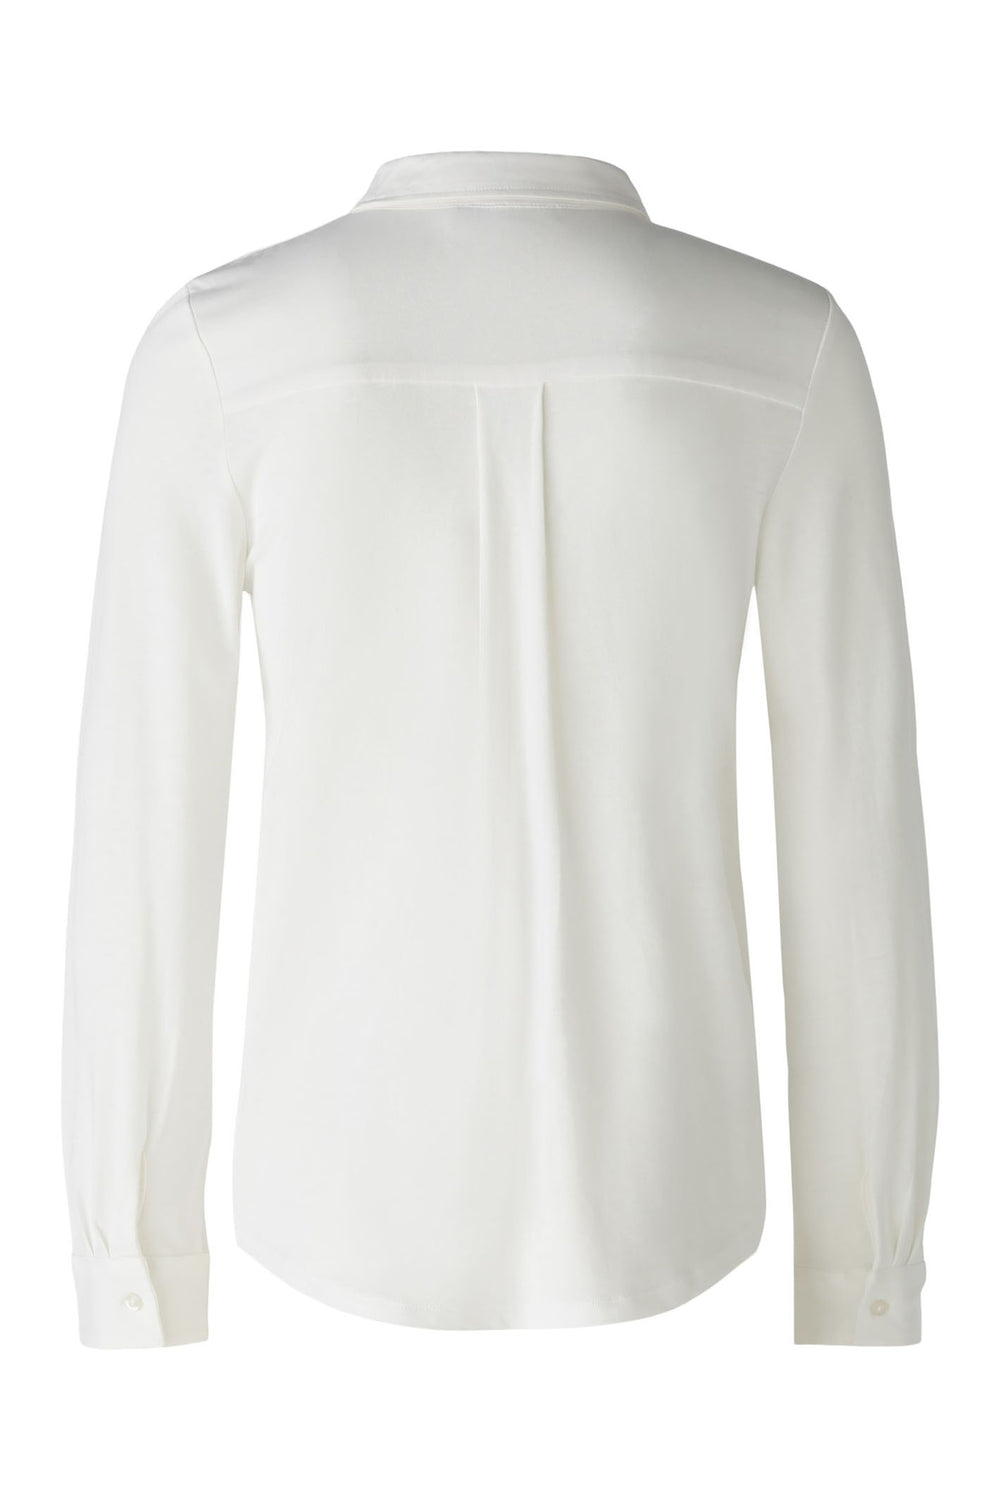 Oui 86746 Cloud Dancer White Shirt - Olivia Grace Fashion